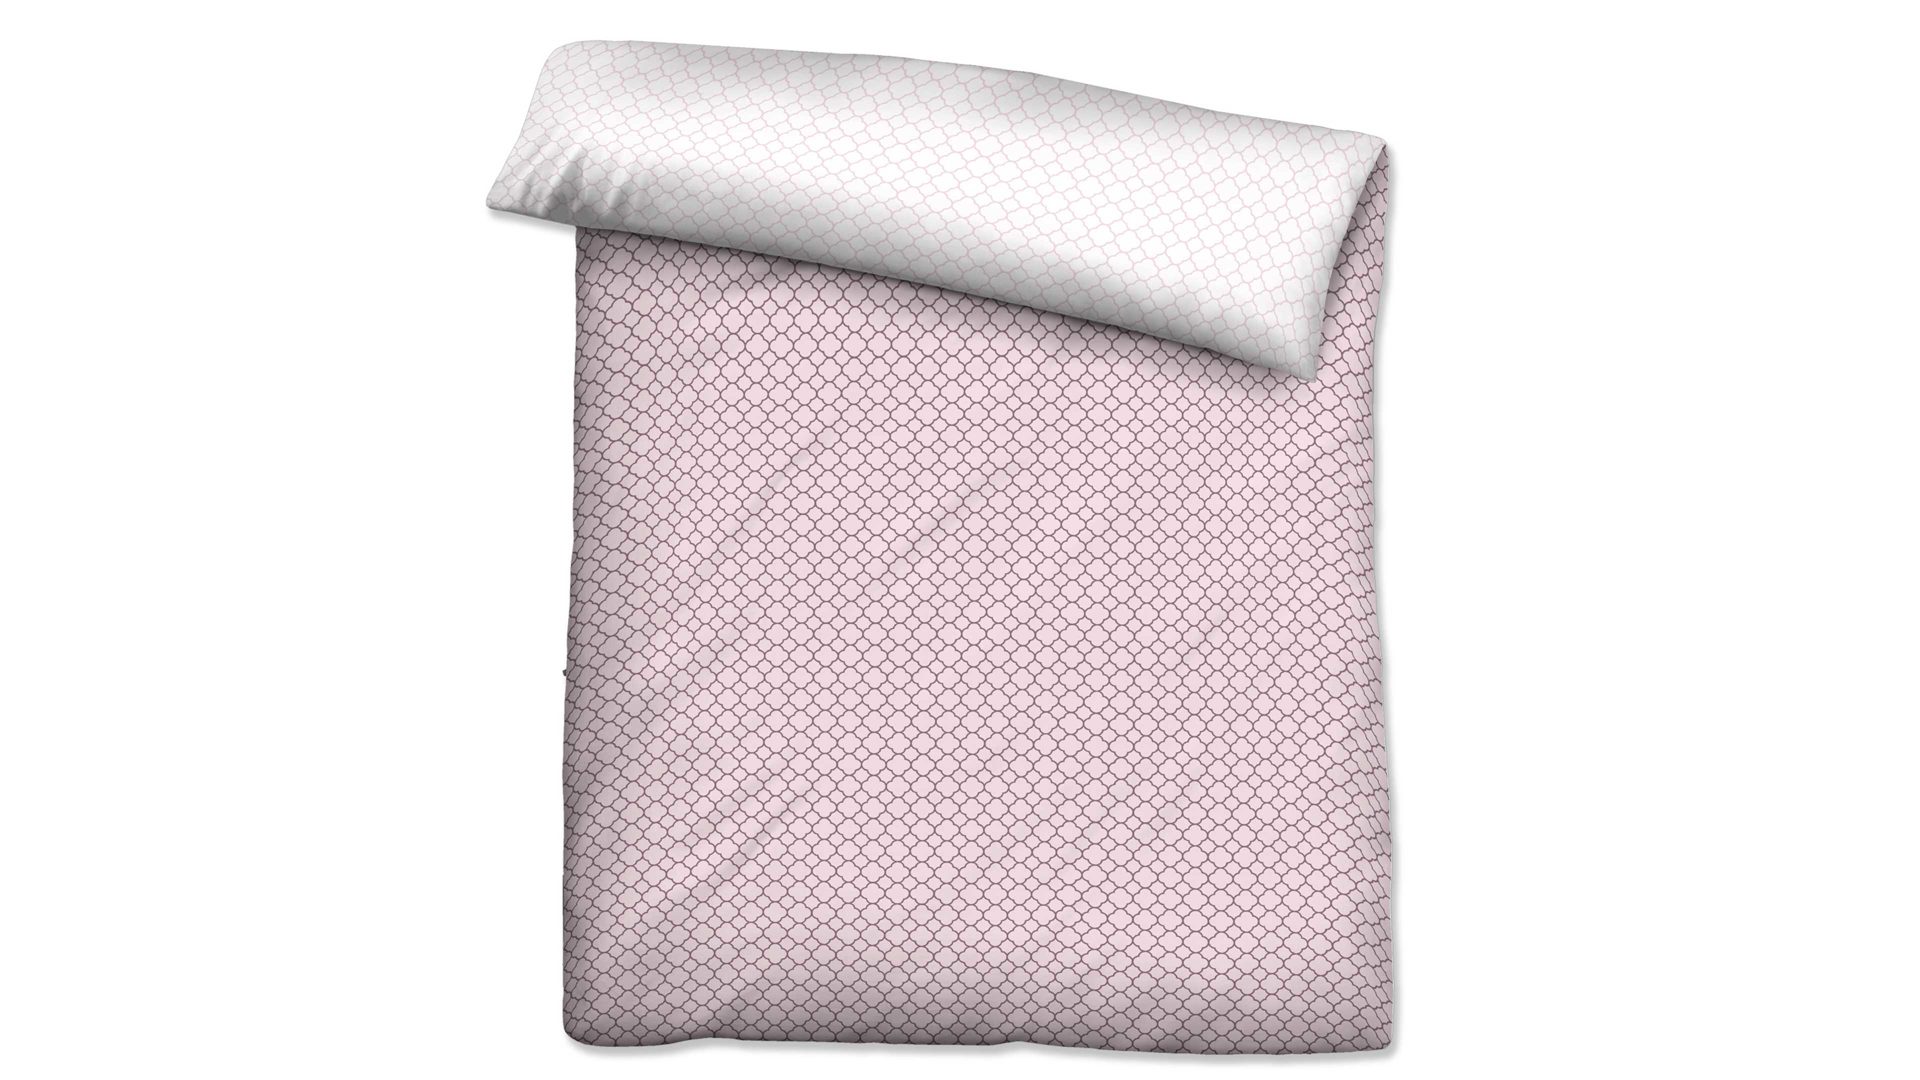 Bettbezug Biberna aus Stoff in Pastell biberna Mako-Satin Bettdeckenbezug Grafik Mix & Match rosefarbenes & weißes Grafikmuster – ca. 155 x 200 cm